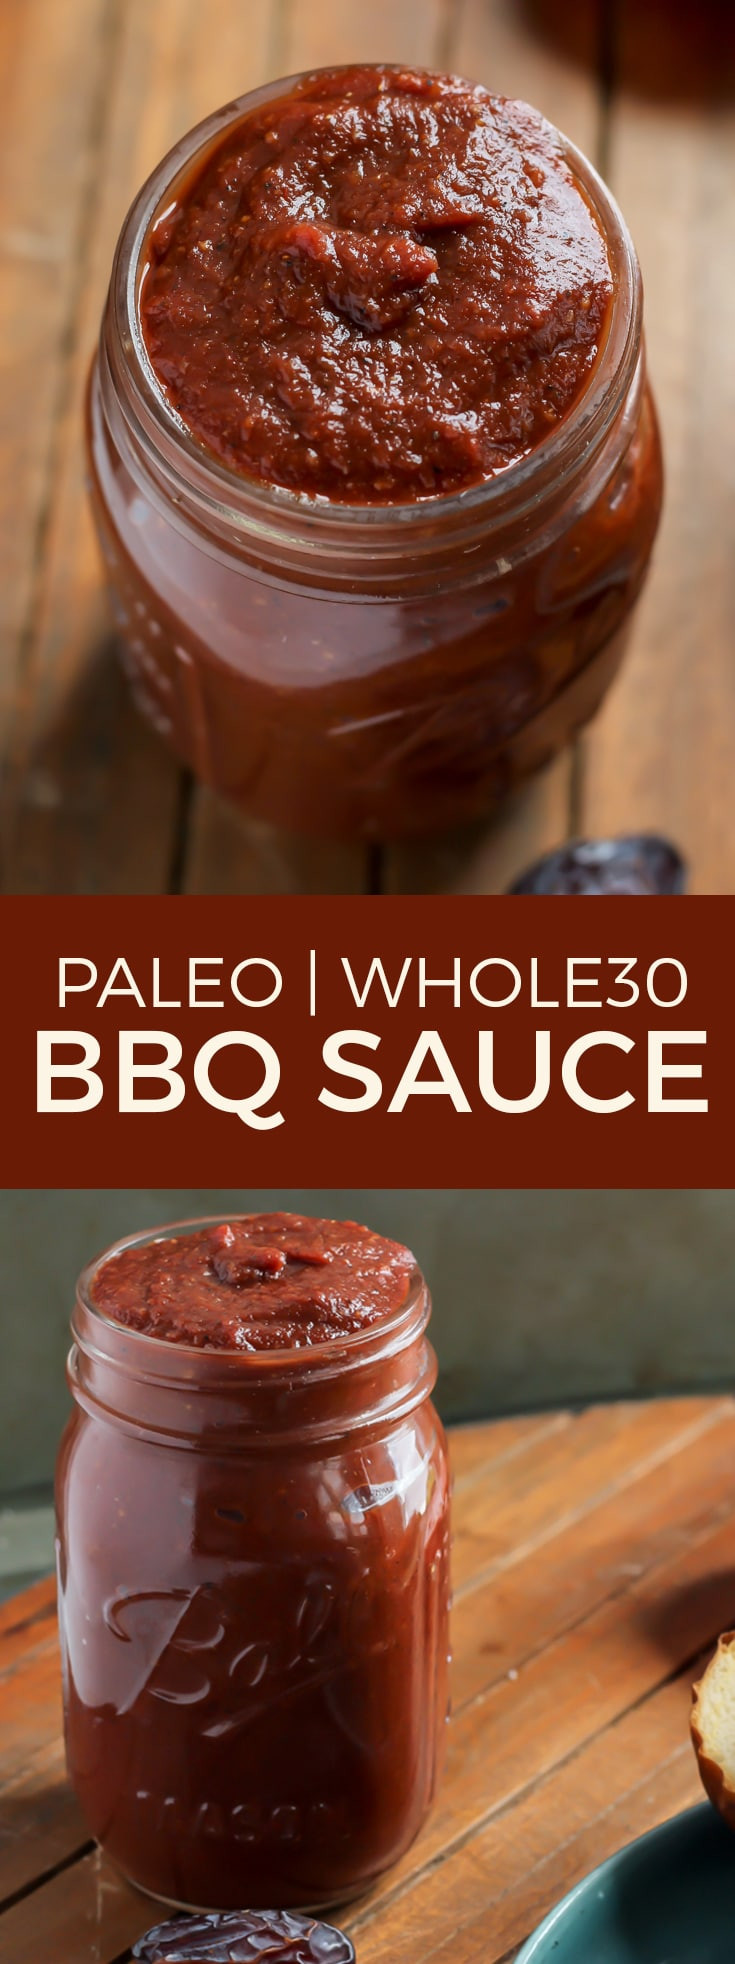 Whole30 Bbq Sauce Recipe
 Paleo BBQ Sauce with Medjool Dates [ GF Vegan Whole30